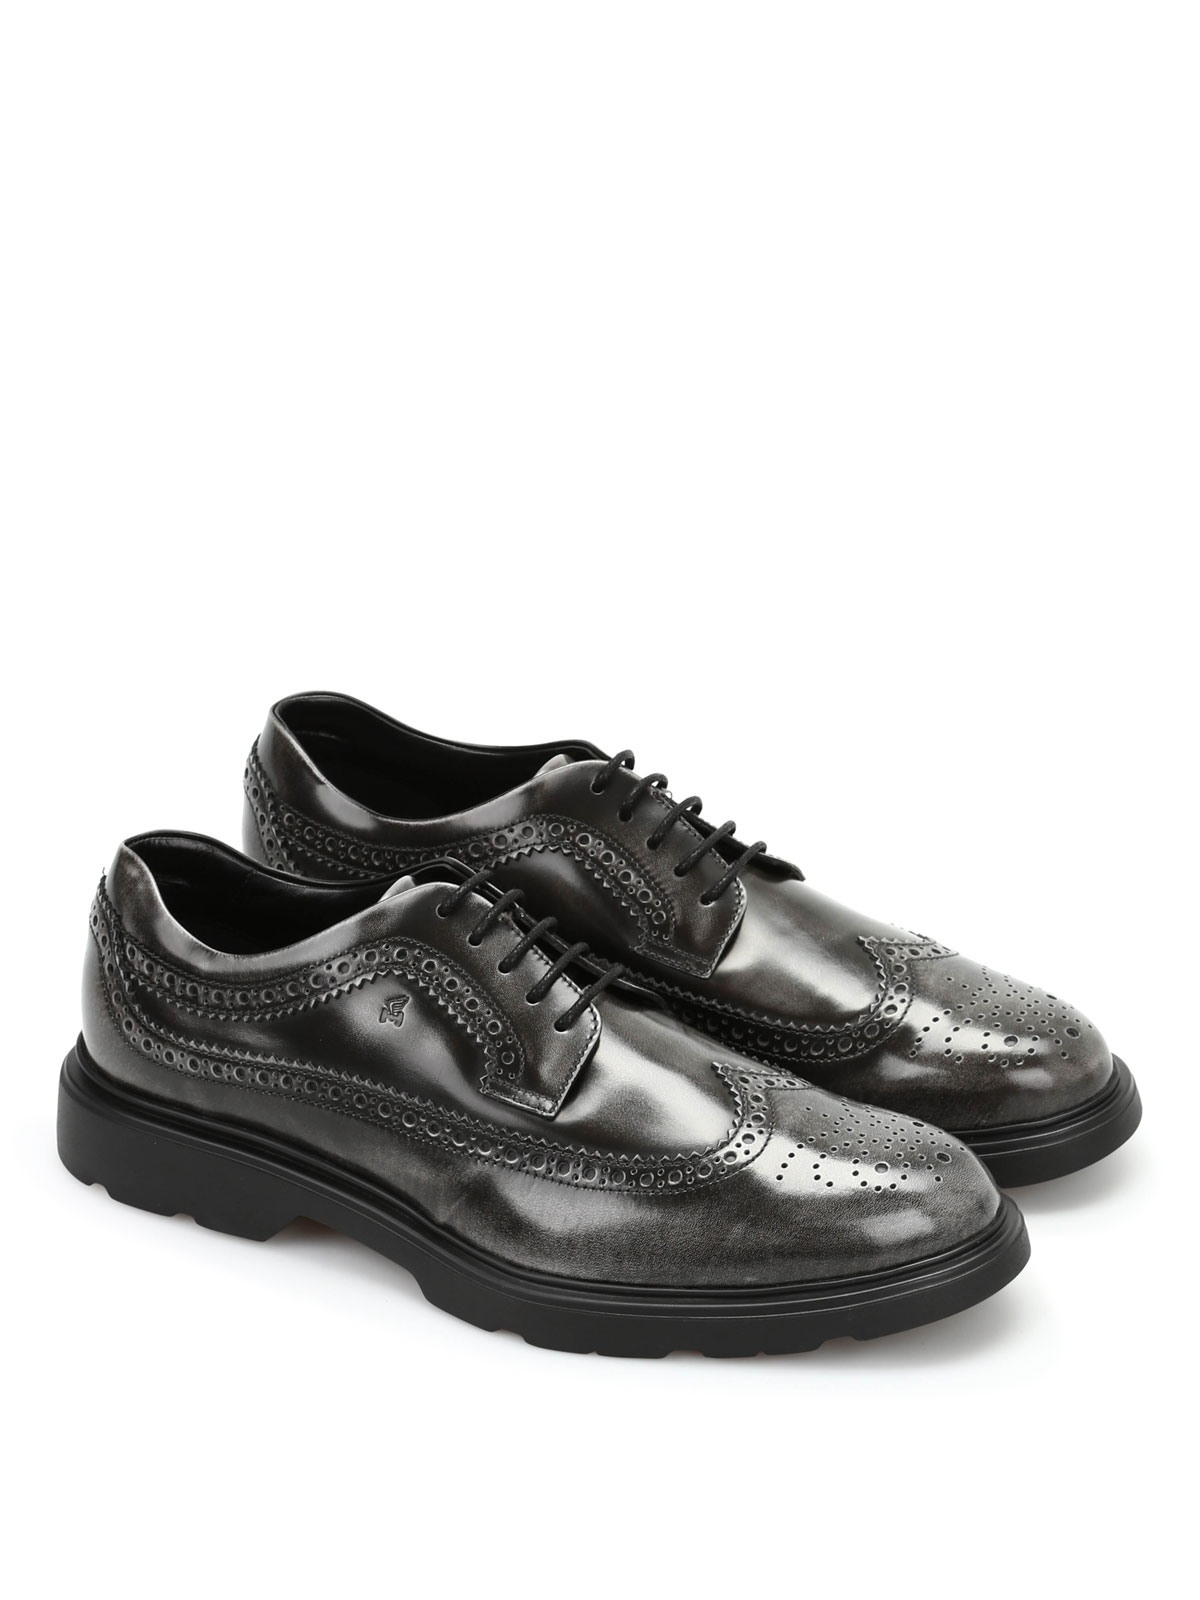 Erge, ernstige Bijproduct schoonmaken Lace-ups shoes Hogan - New Route derby shoes - HXM3040W3606Q6B607